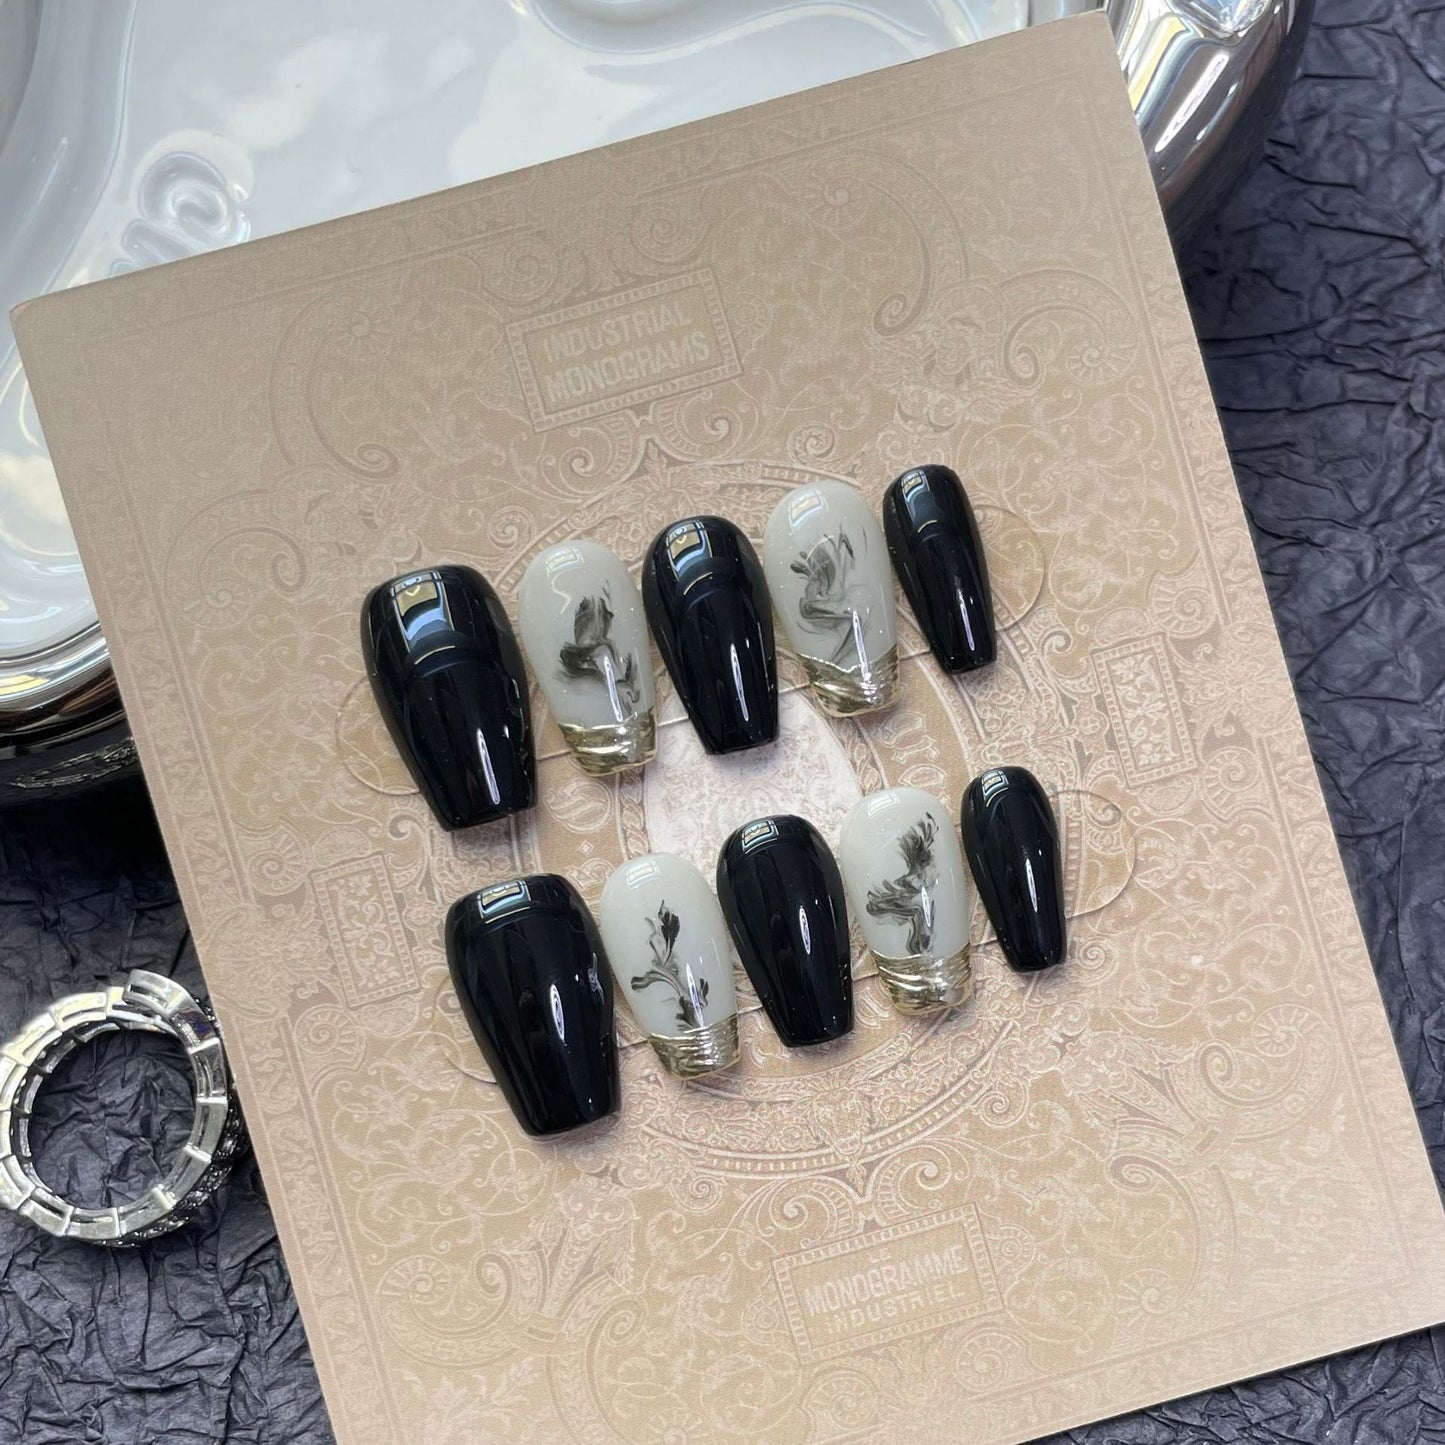 1243 Dark Night Stain style press on nails 100% handmade false nails black white